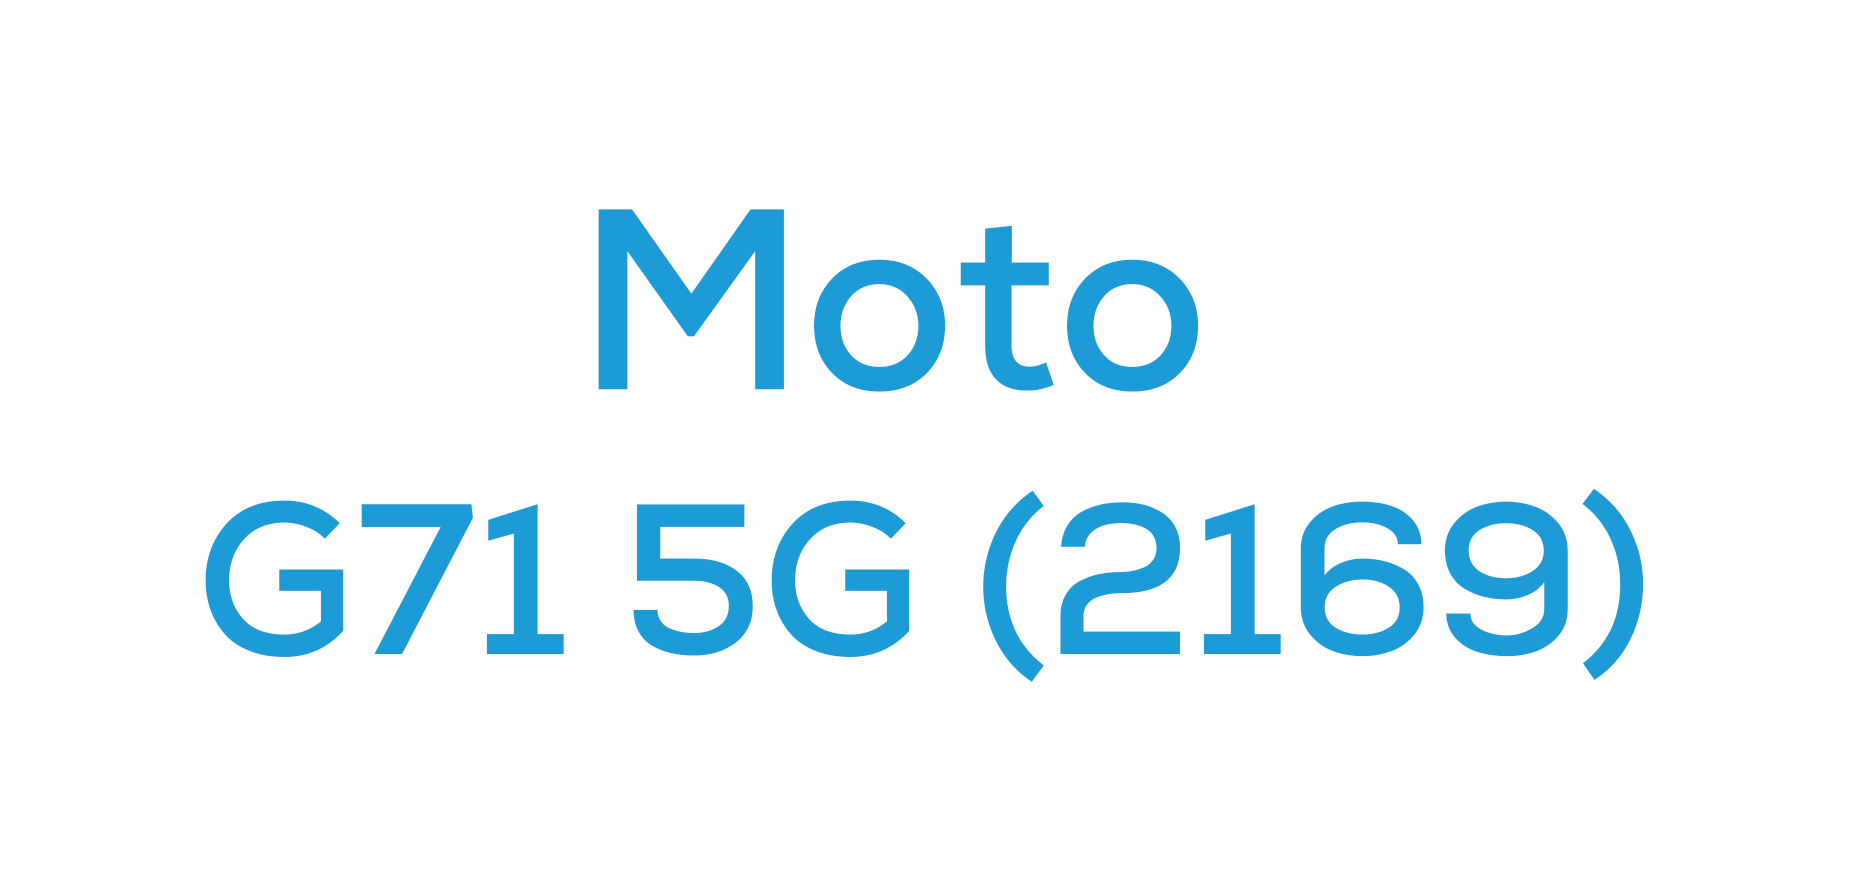 Moto G71 5G (2169)